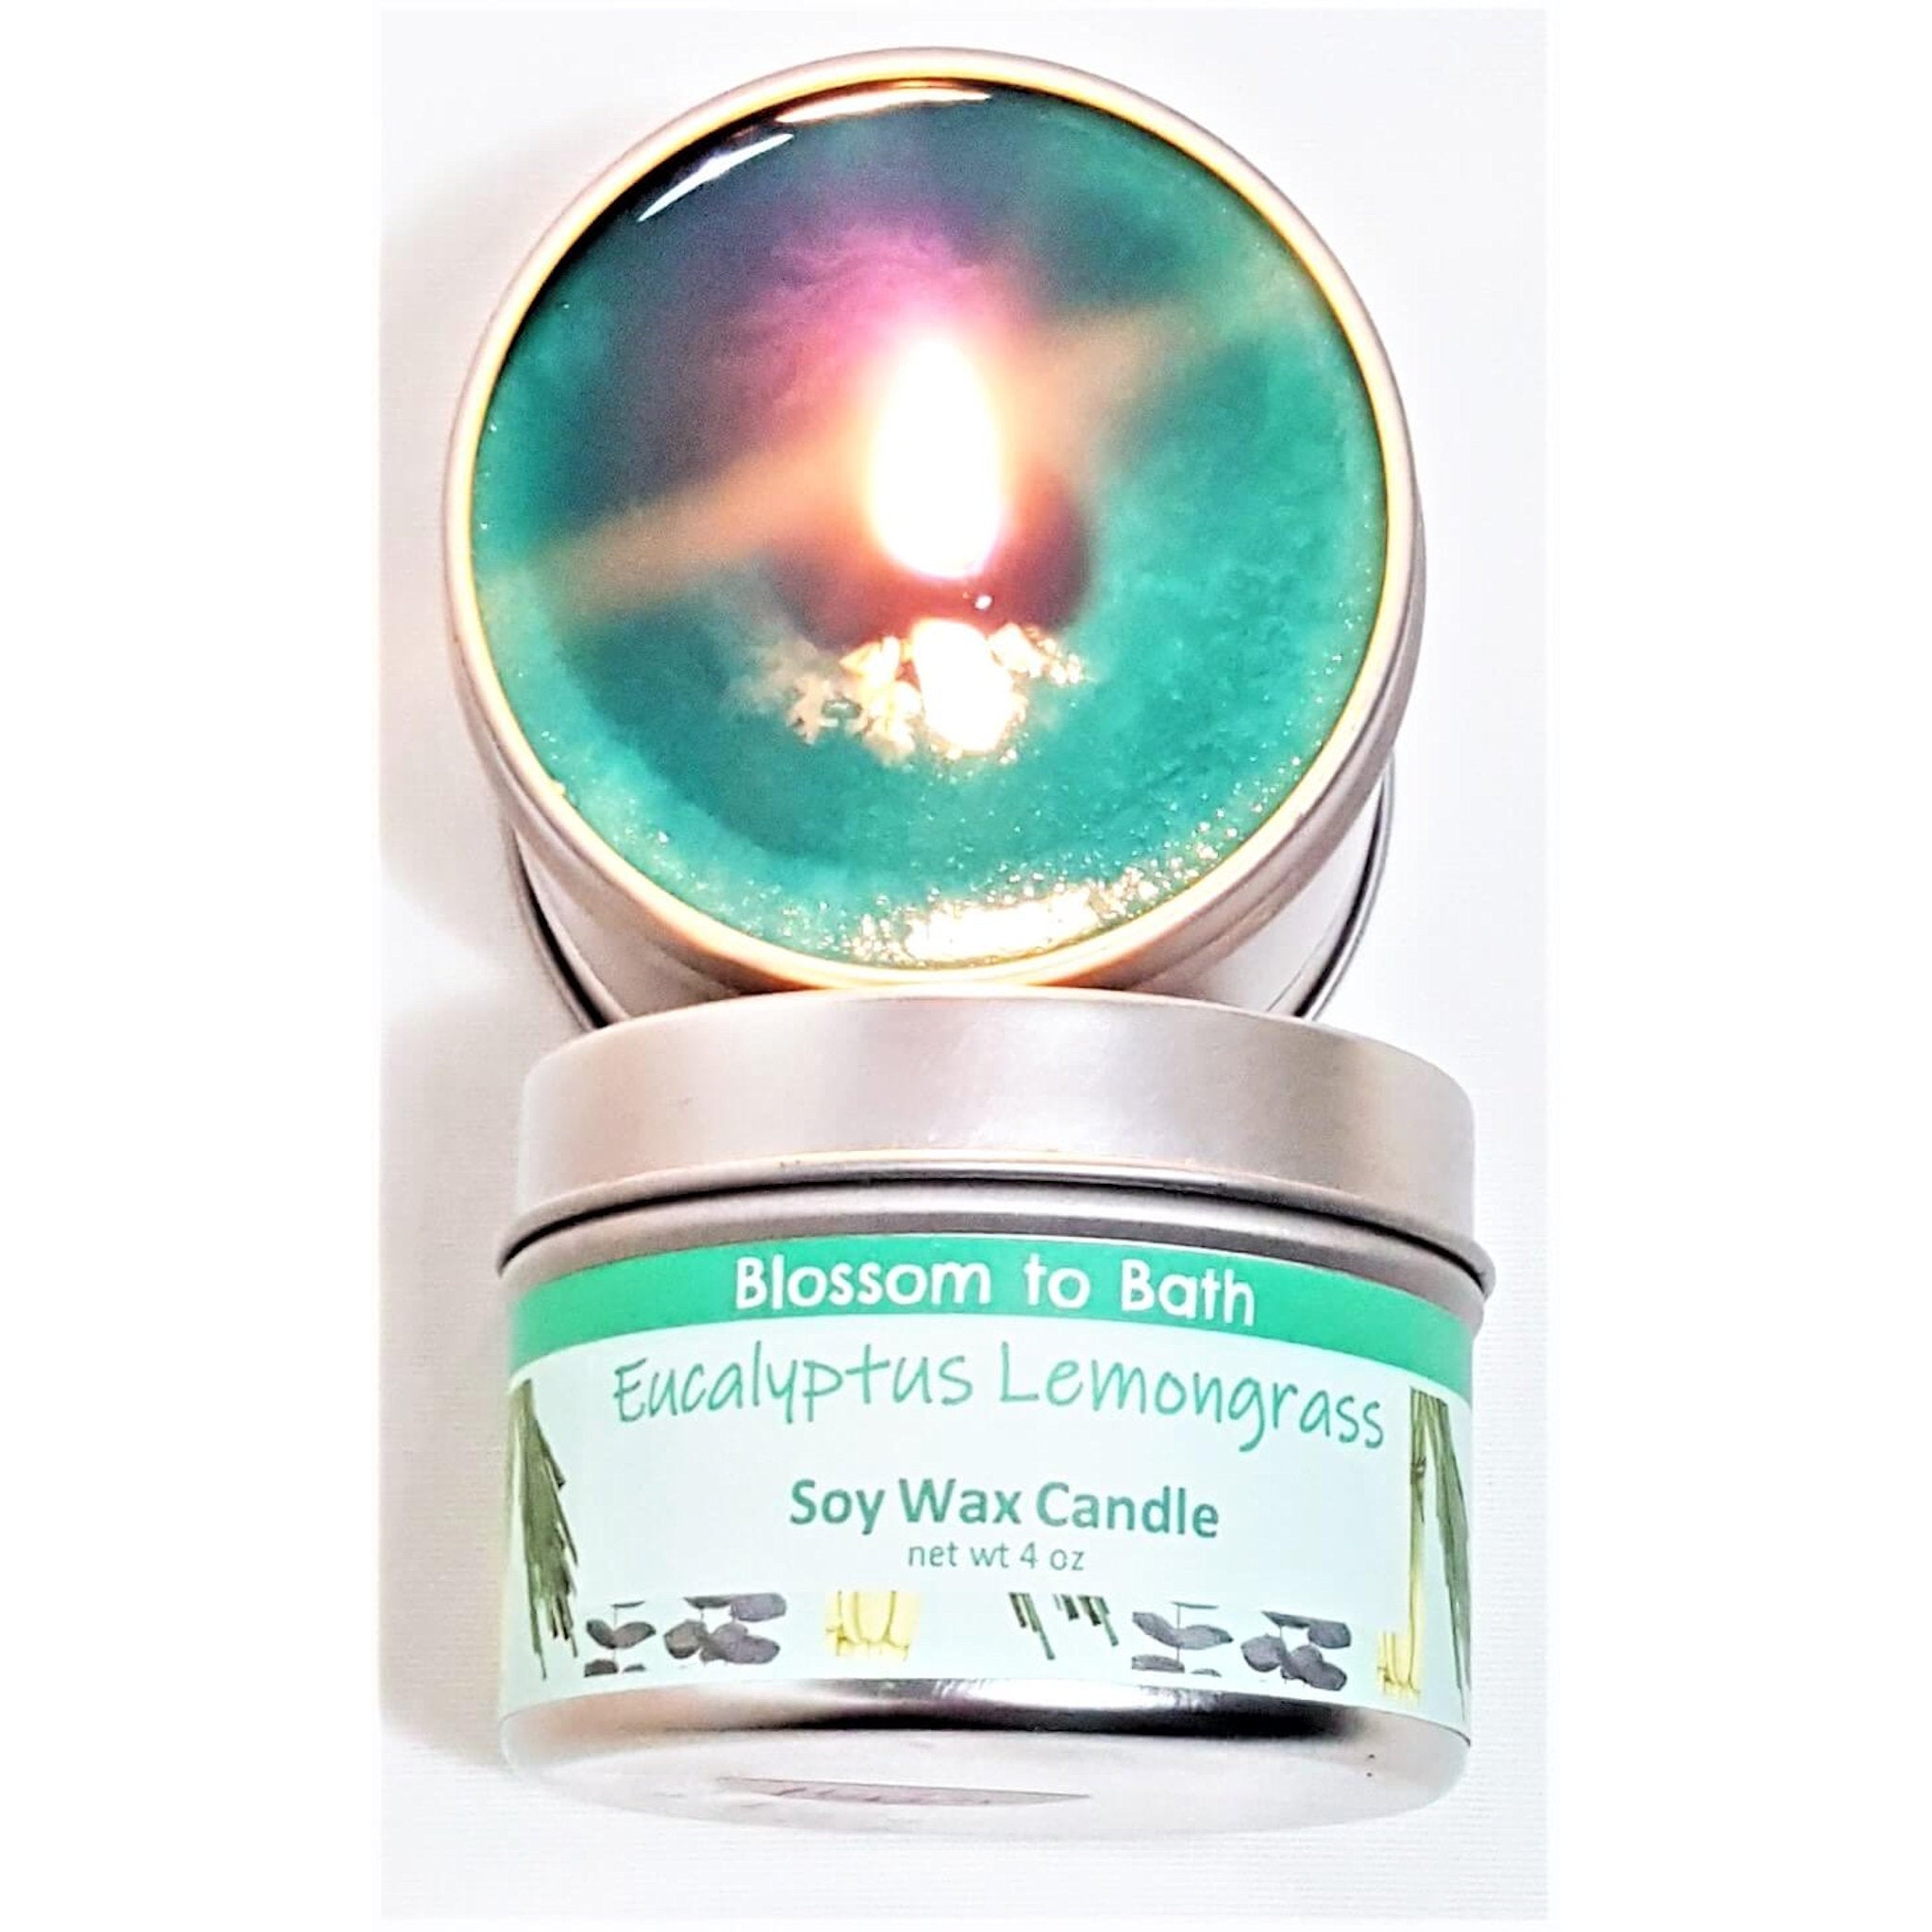 Eucalyptus Lemongrass Soy Wax Candle (3.5 ounce)|Blossom to Bath